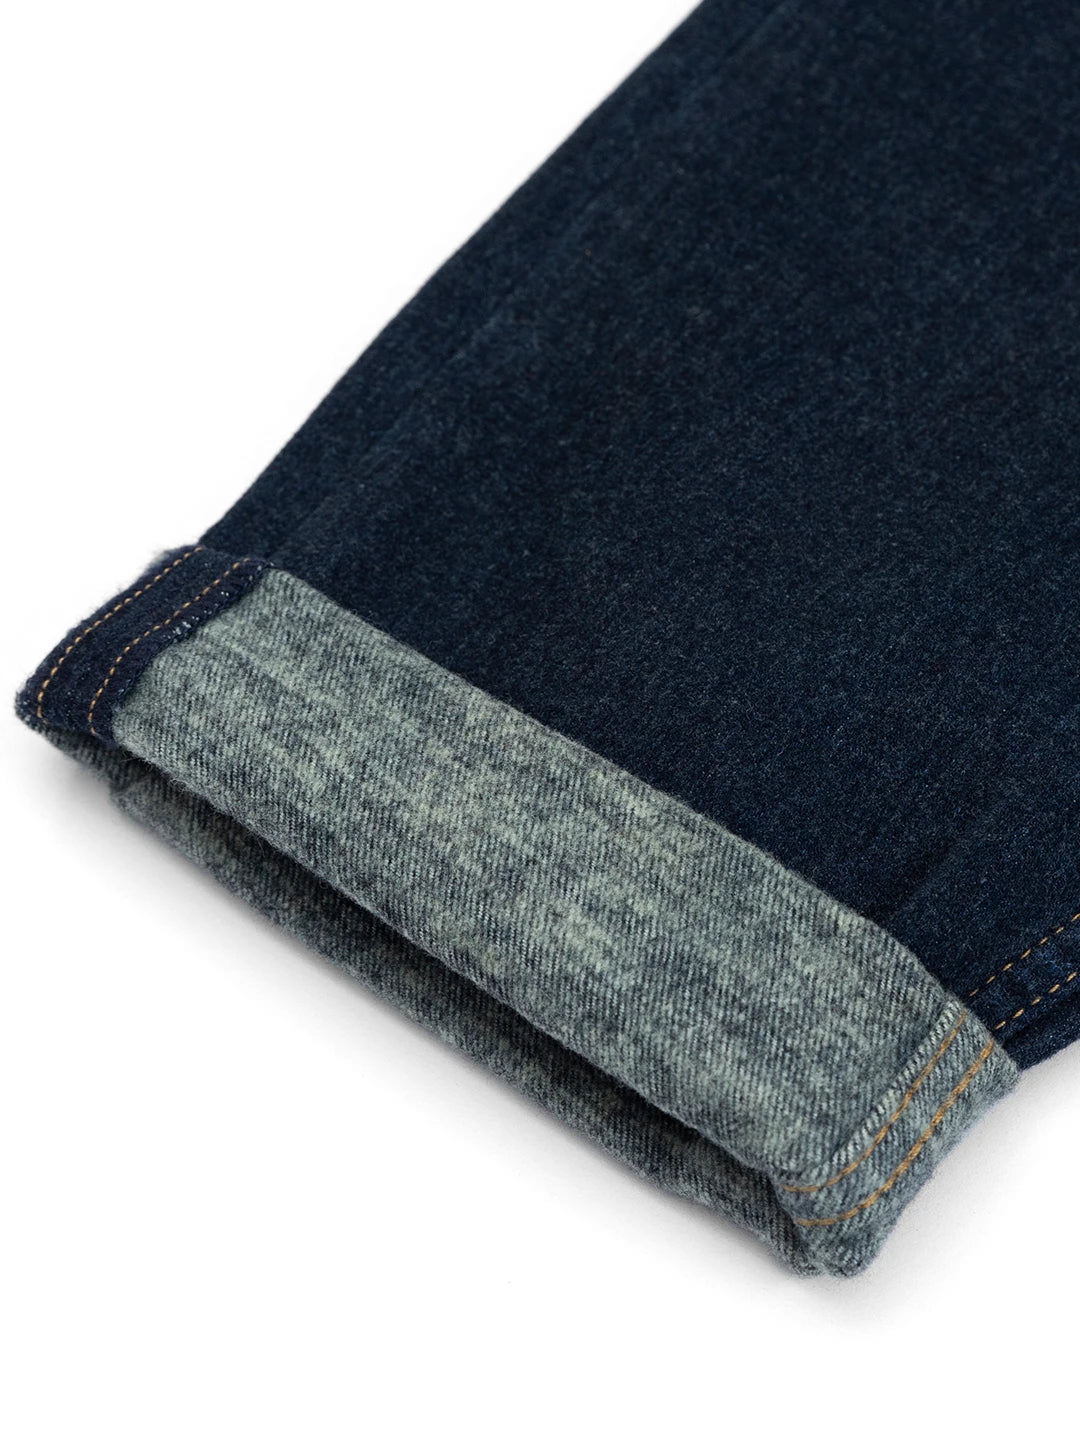 SIMWOOD New Men's Fleece Ankle-Length Jeans - Trend Zone